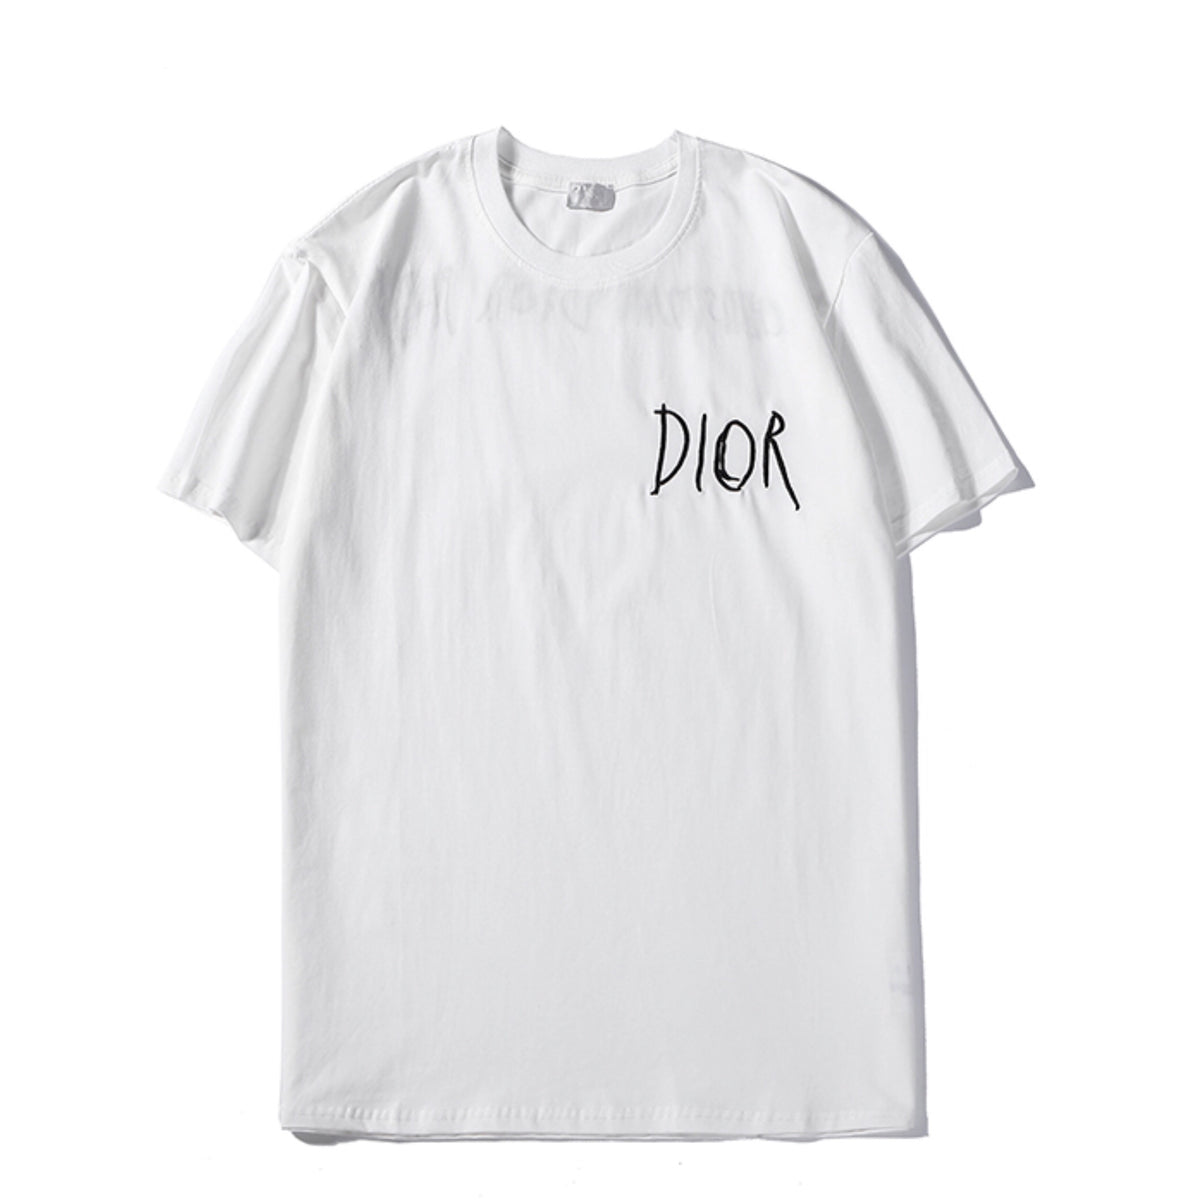 christian dior shirt price